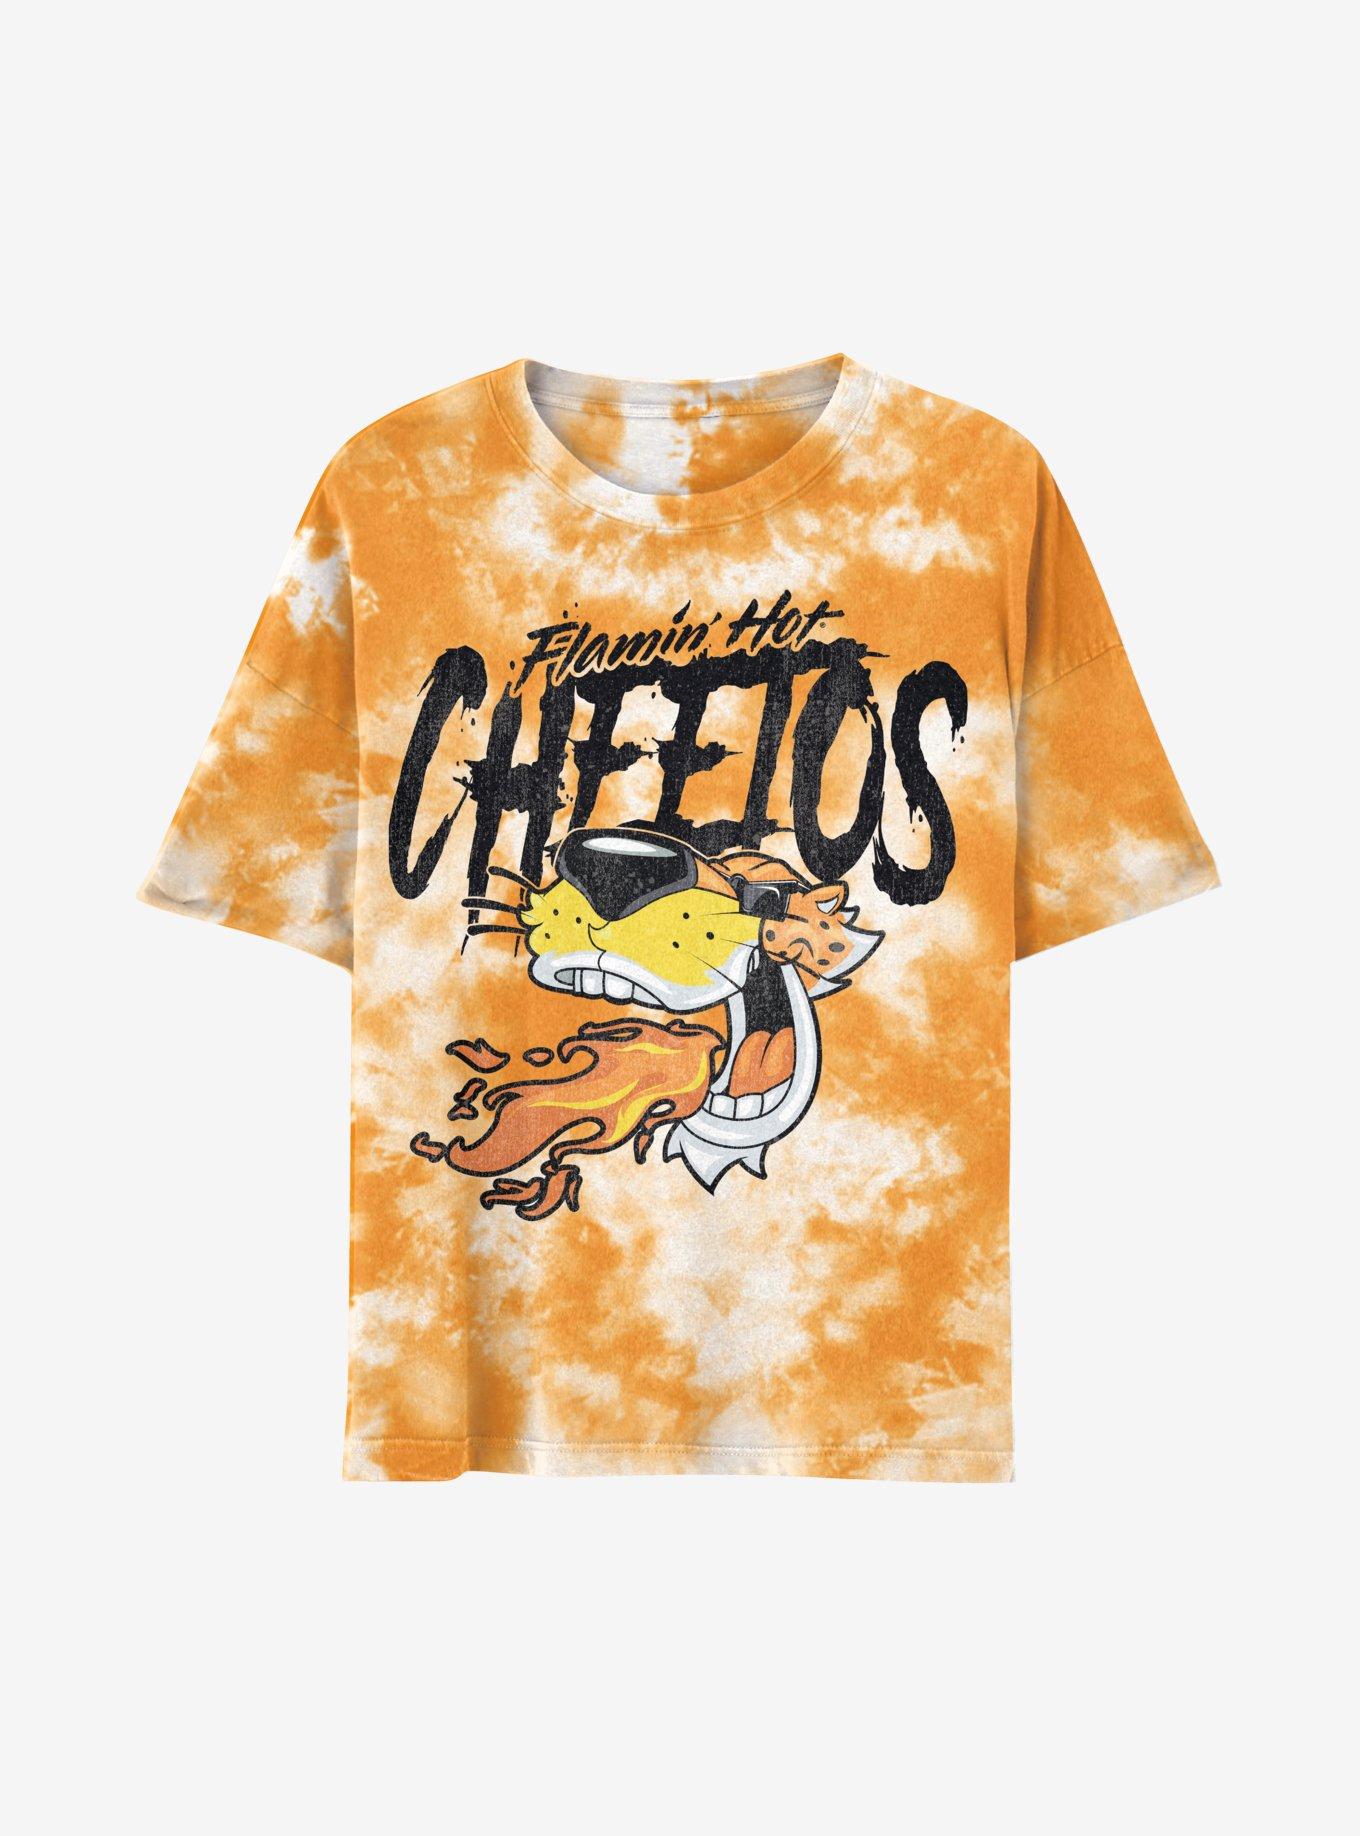 Flamin' Hot Cheetos Tie-Dye Boyfriend Fit Girls T-Shirt